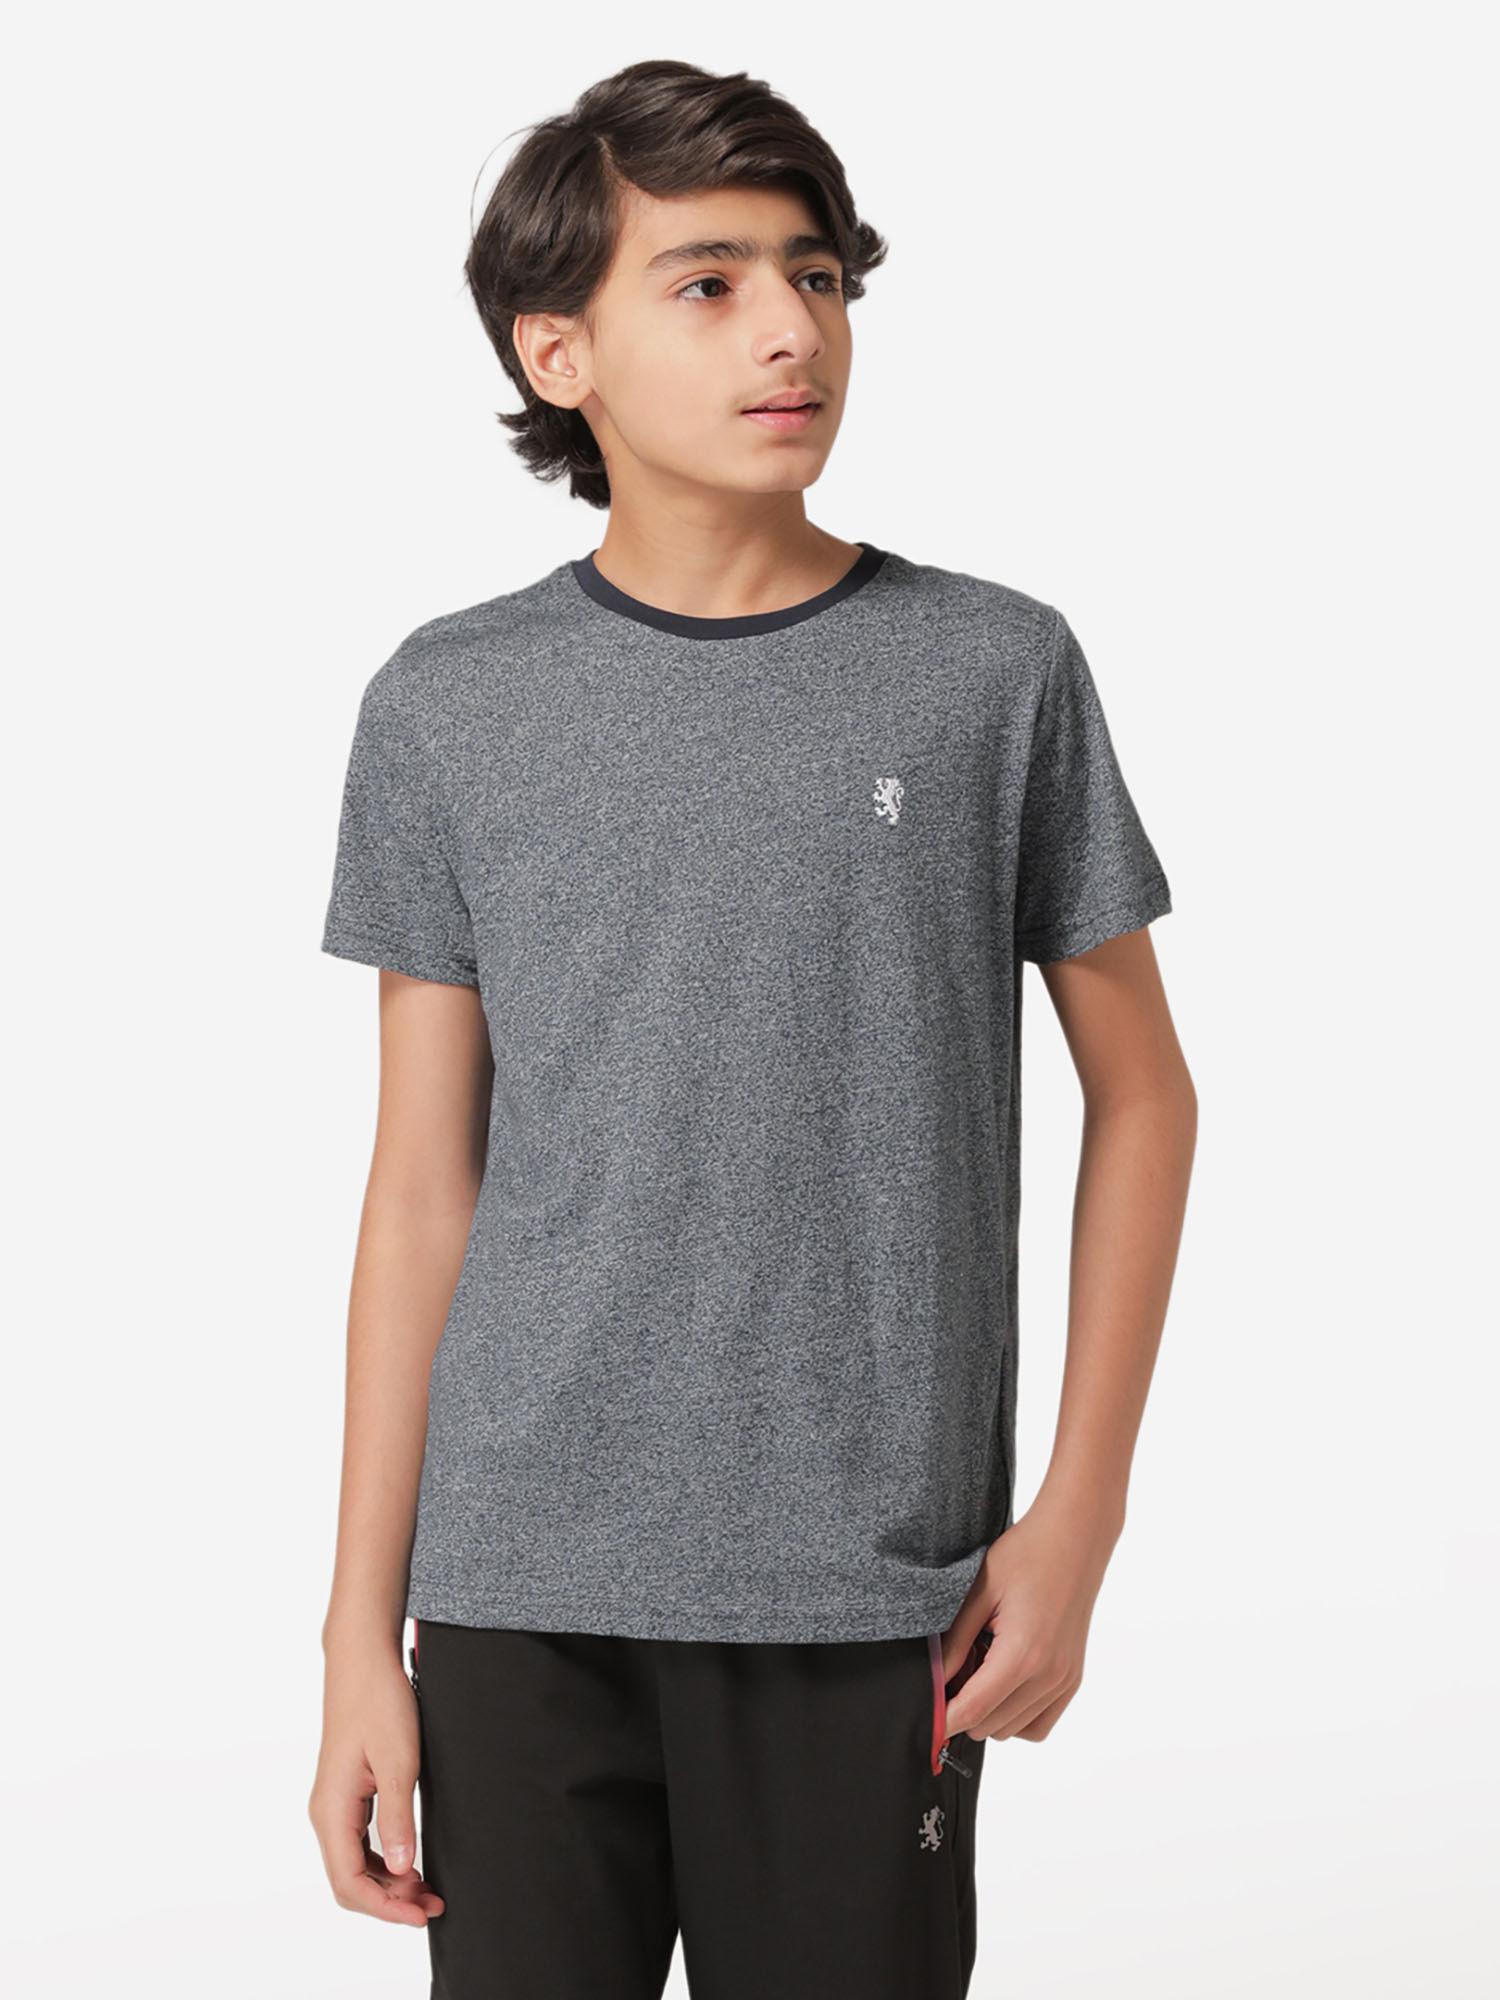 grey solid t-shirt